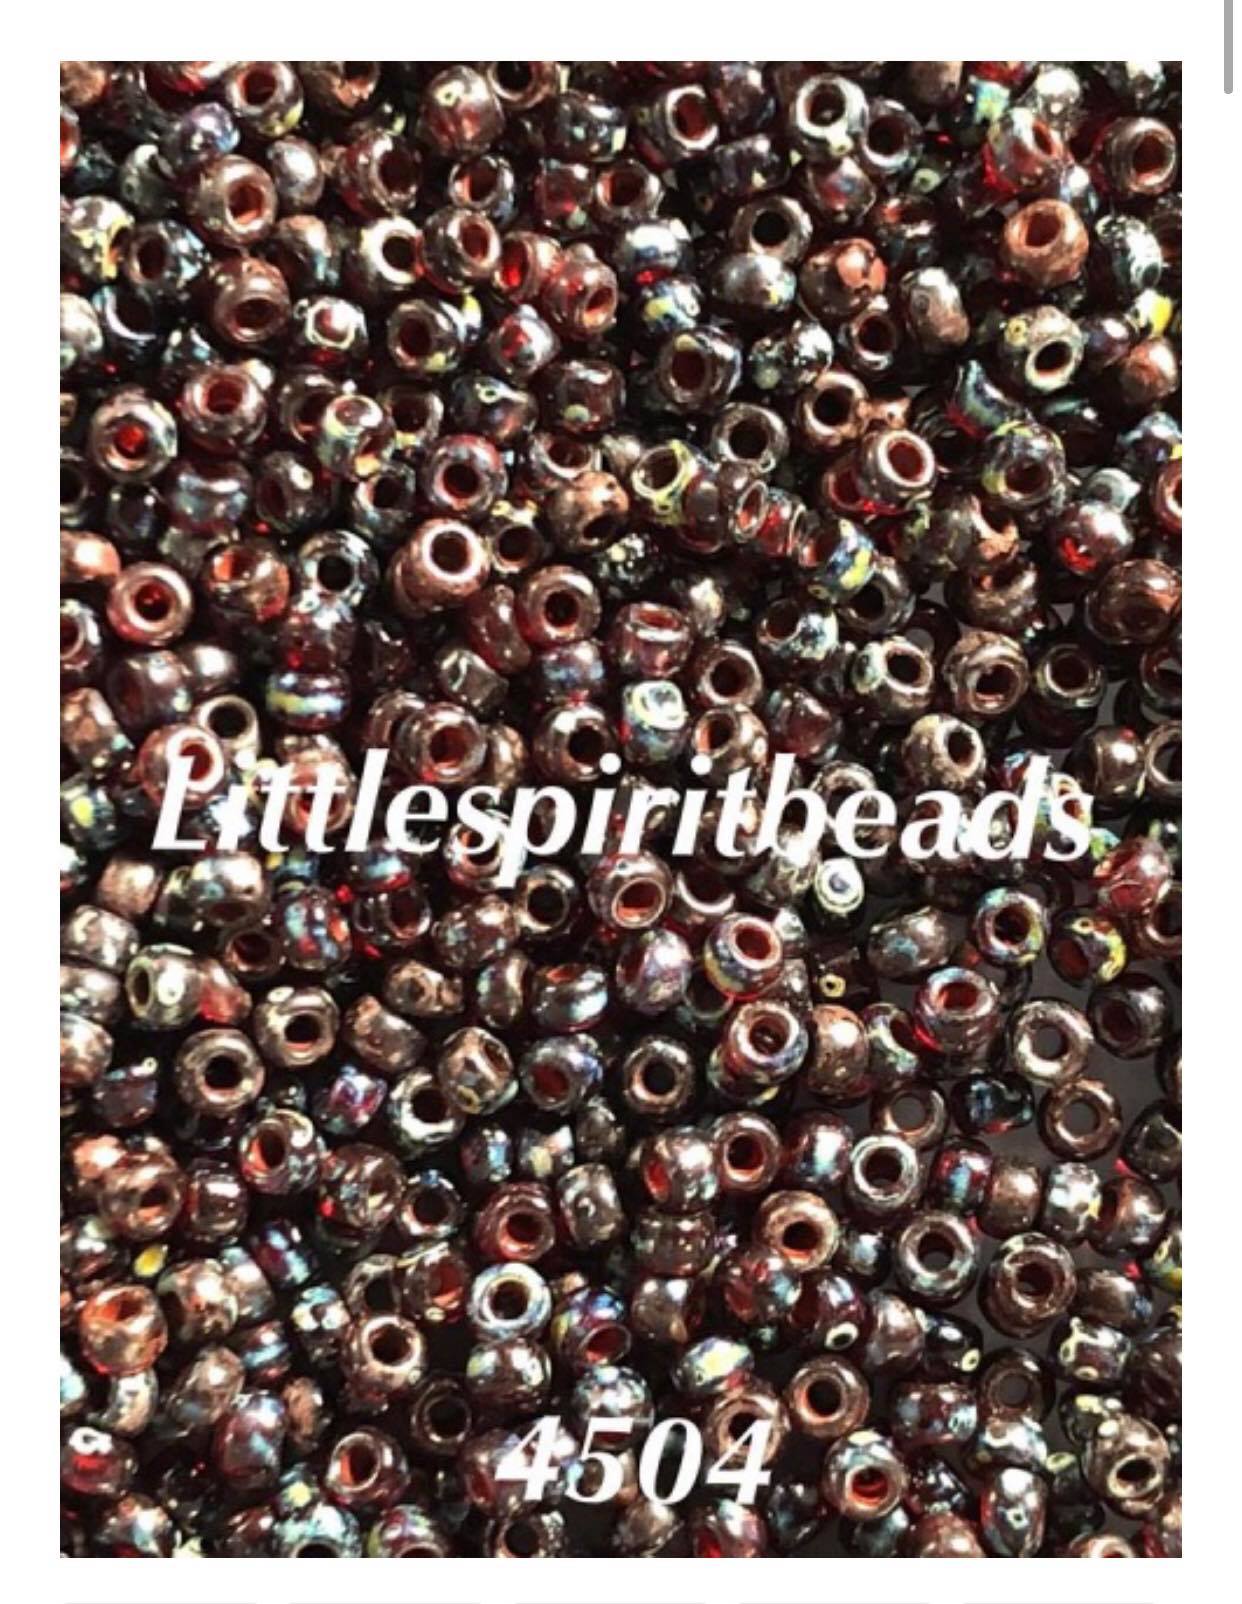 20g Smoky Black Picasso Miyuki 6/0 Seed Beads -- Miyuki 4511 Size 6/0 (Sku 4321) Czech Glass Beads by GR8BEADS - The Bead Obsession